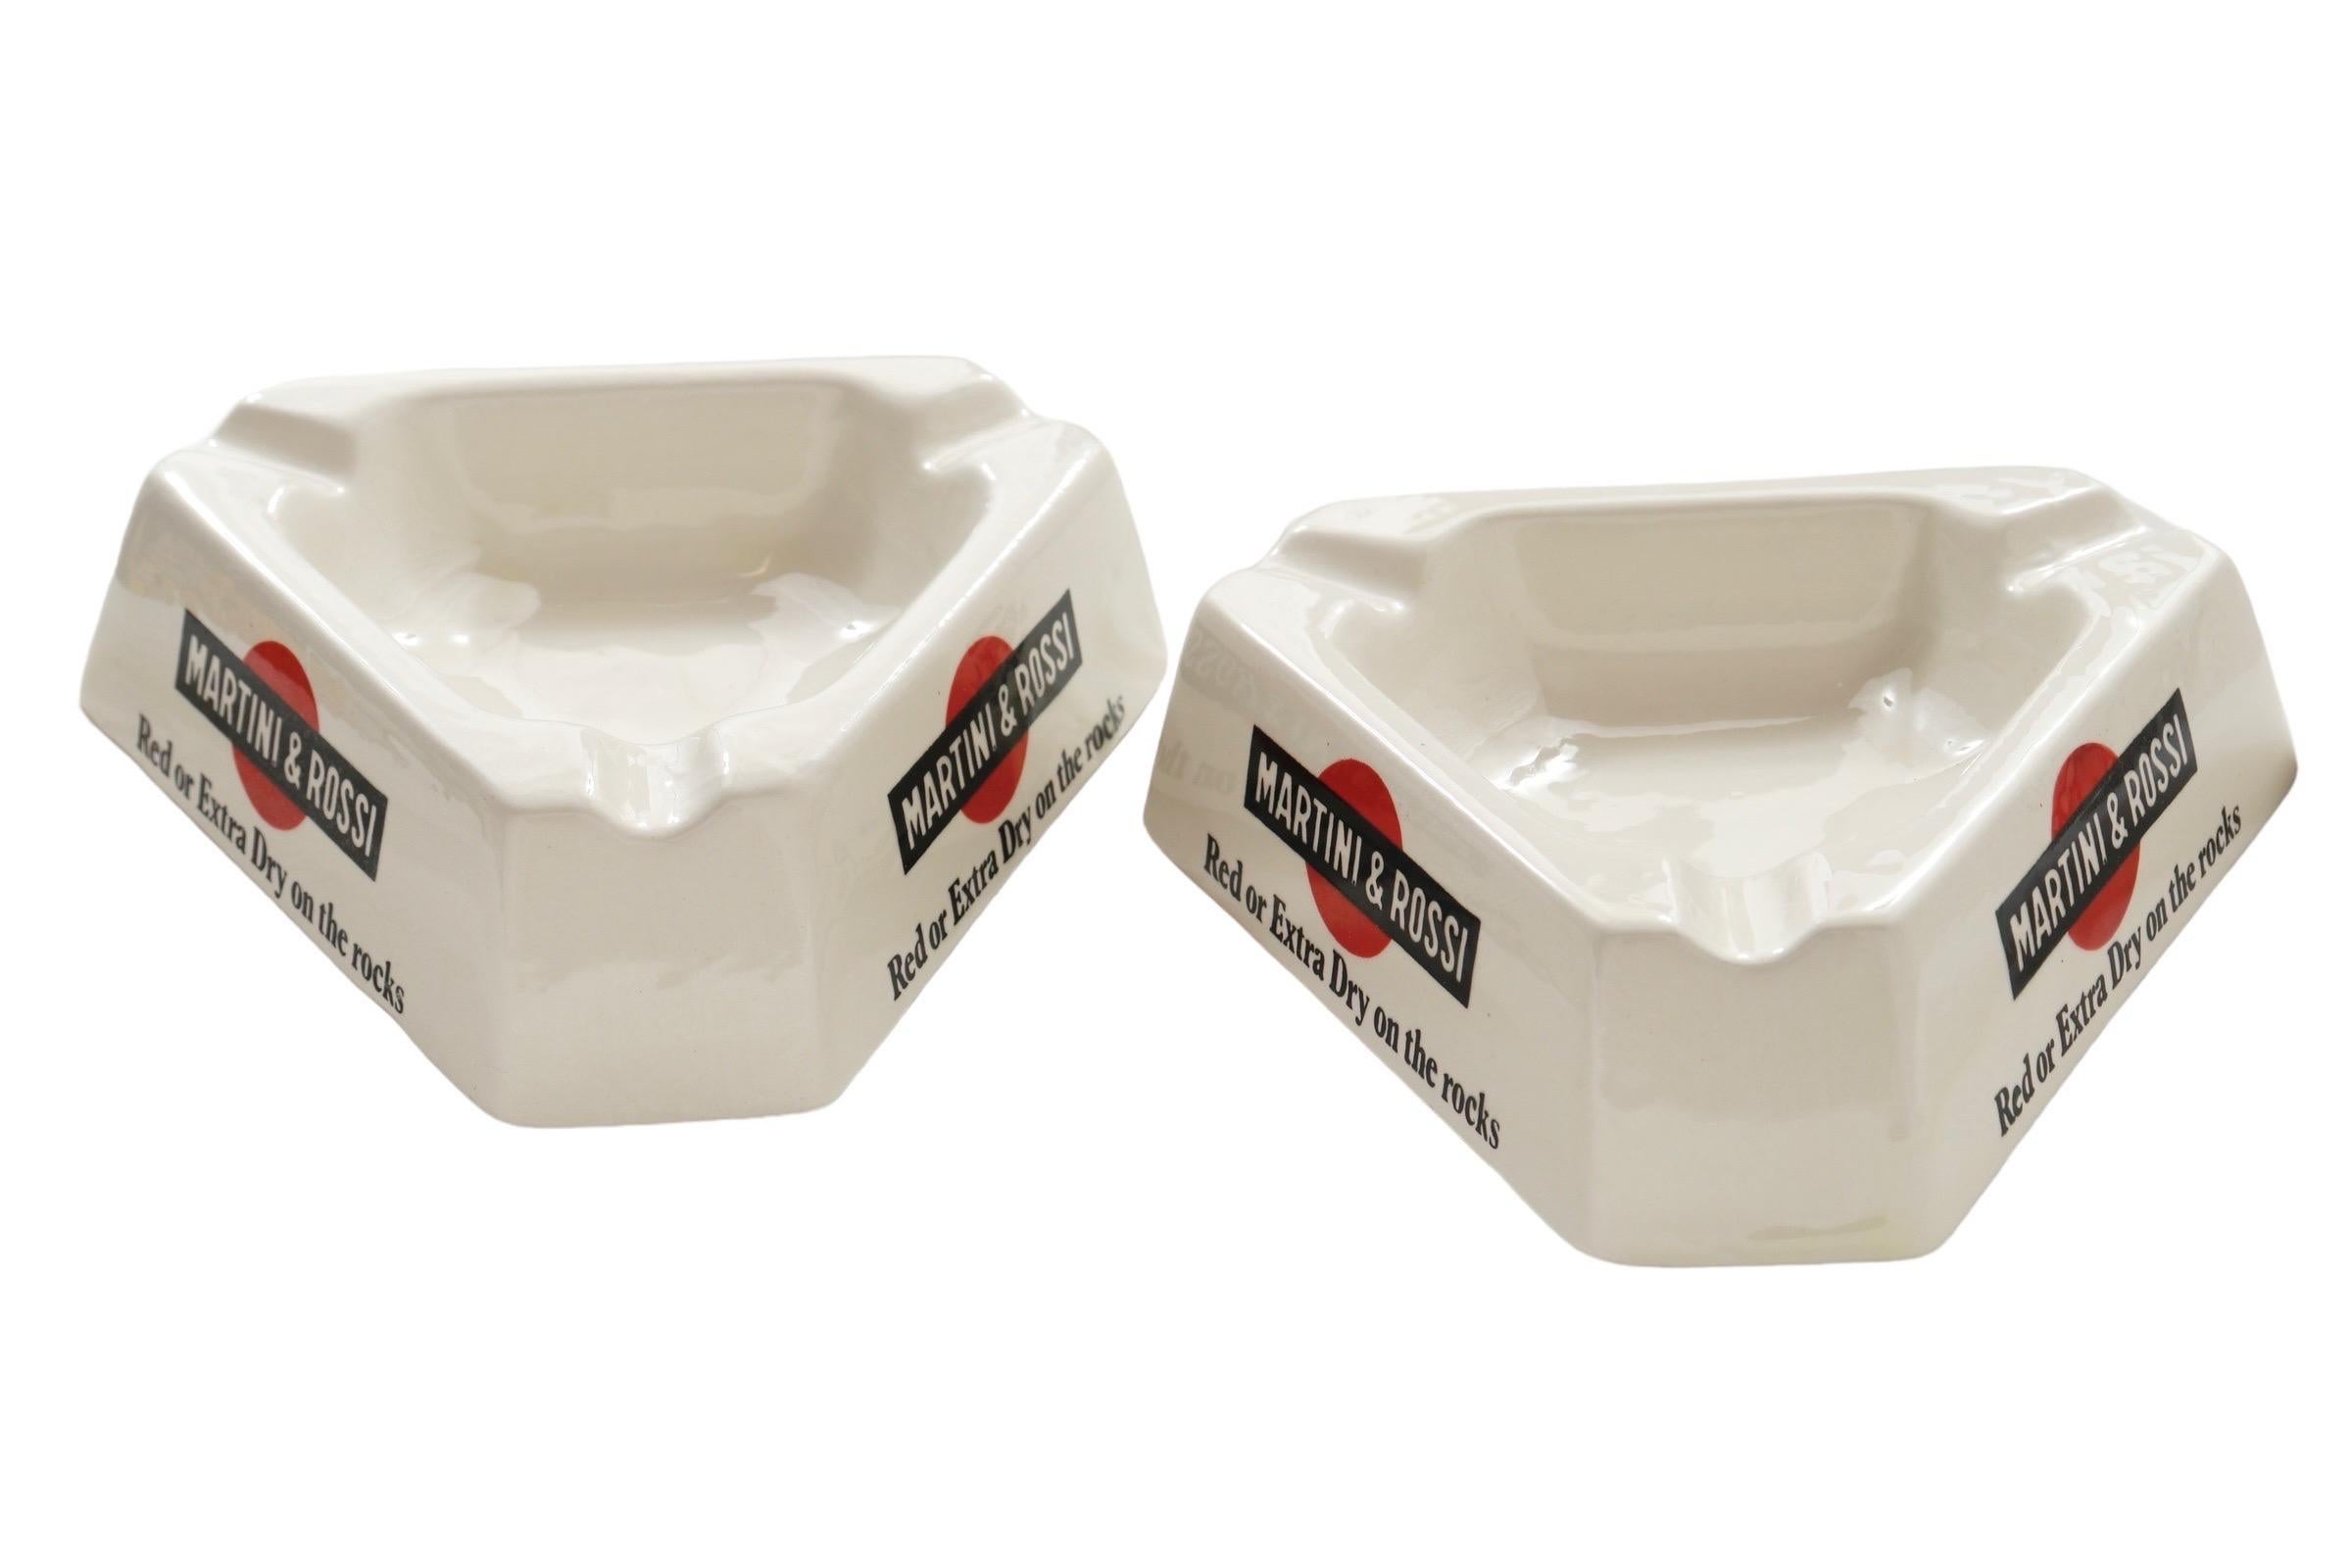 A pair of French Martini & Rossi triangular ceramic ashtrays. White ceramic reads 